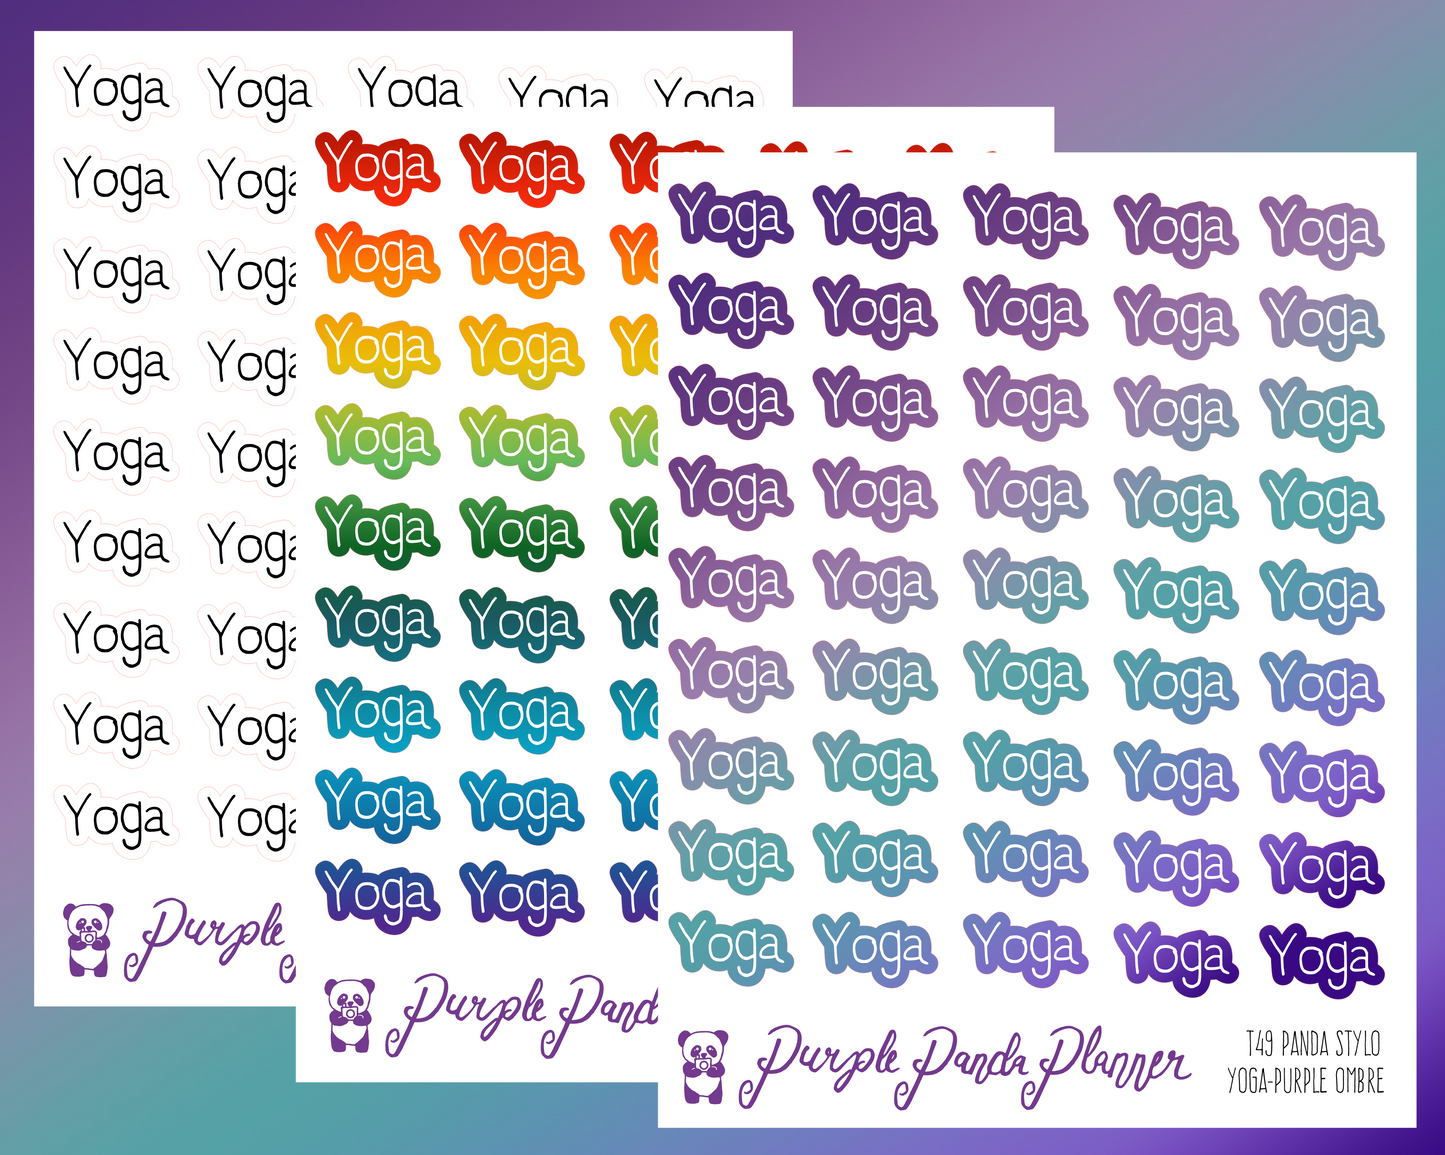 Yoga (T49) - Panda Stylo Script - Black, Rainbow, or Purple Ombre - Stickers for Planner, Journal or Calendar